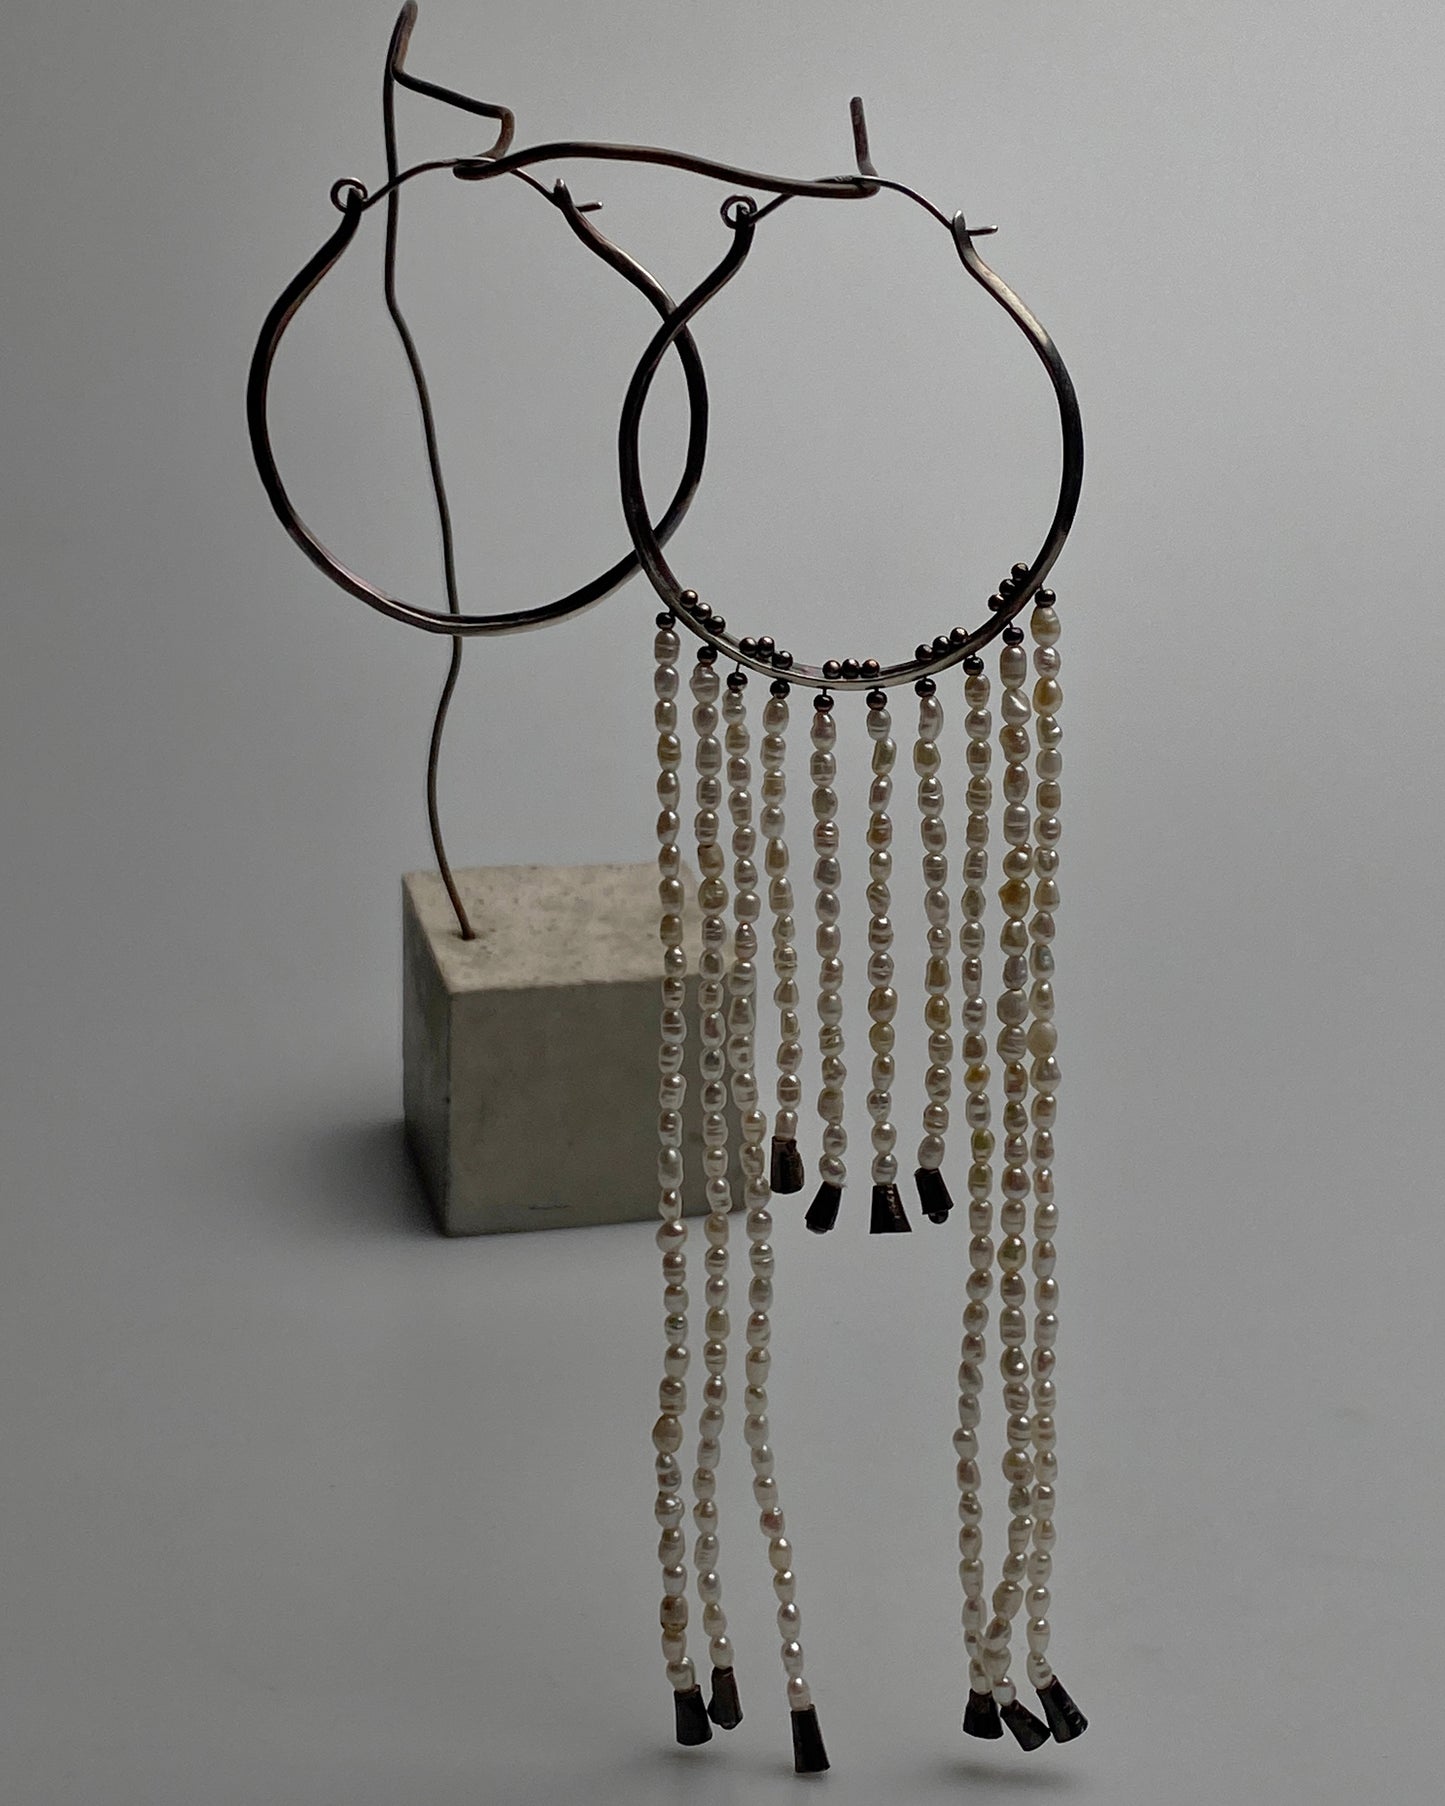 Earrings with pearl pendants